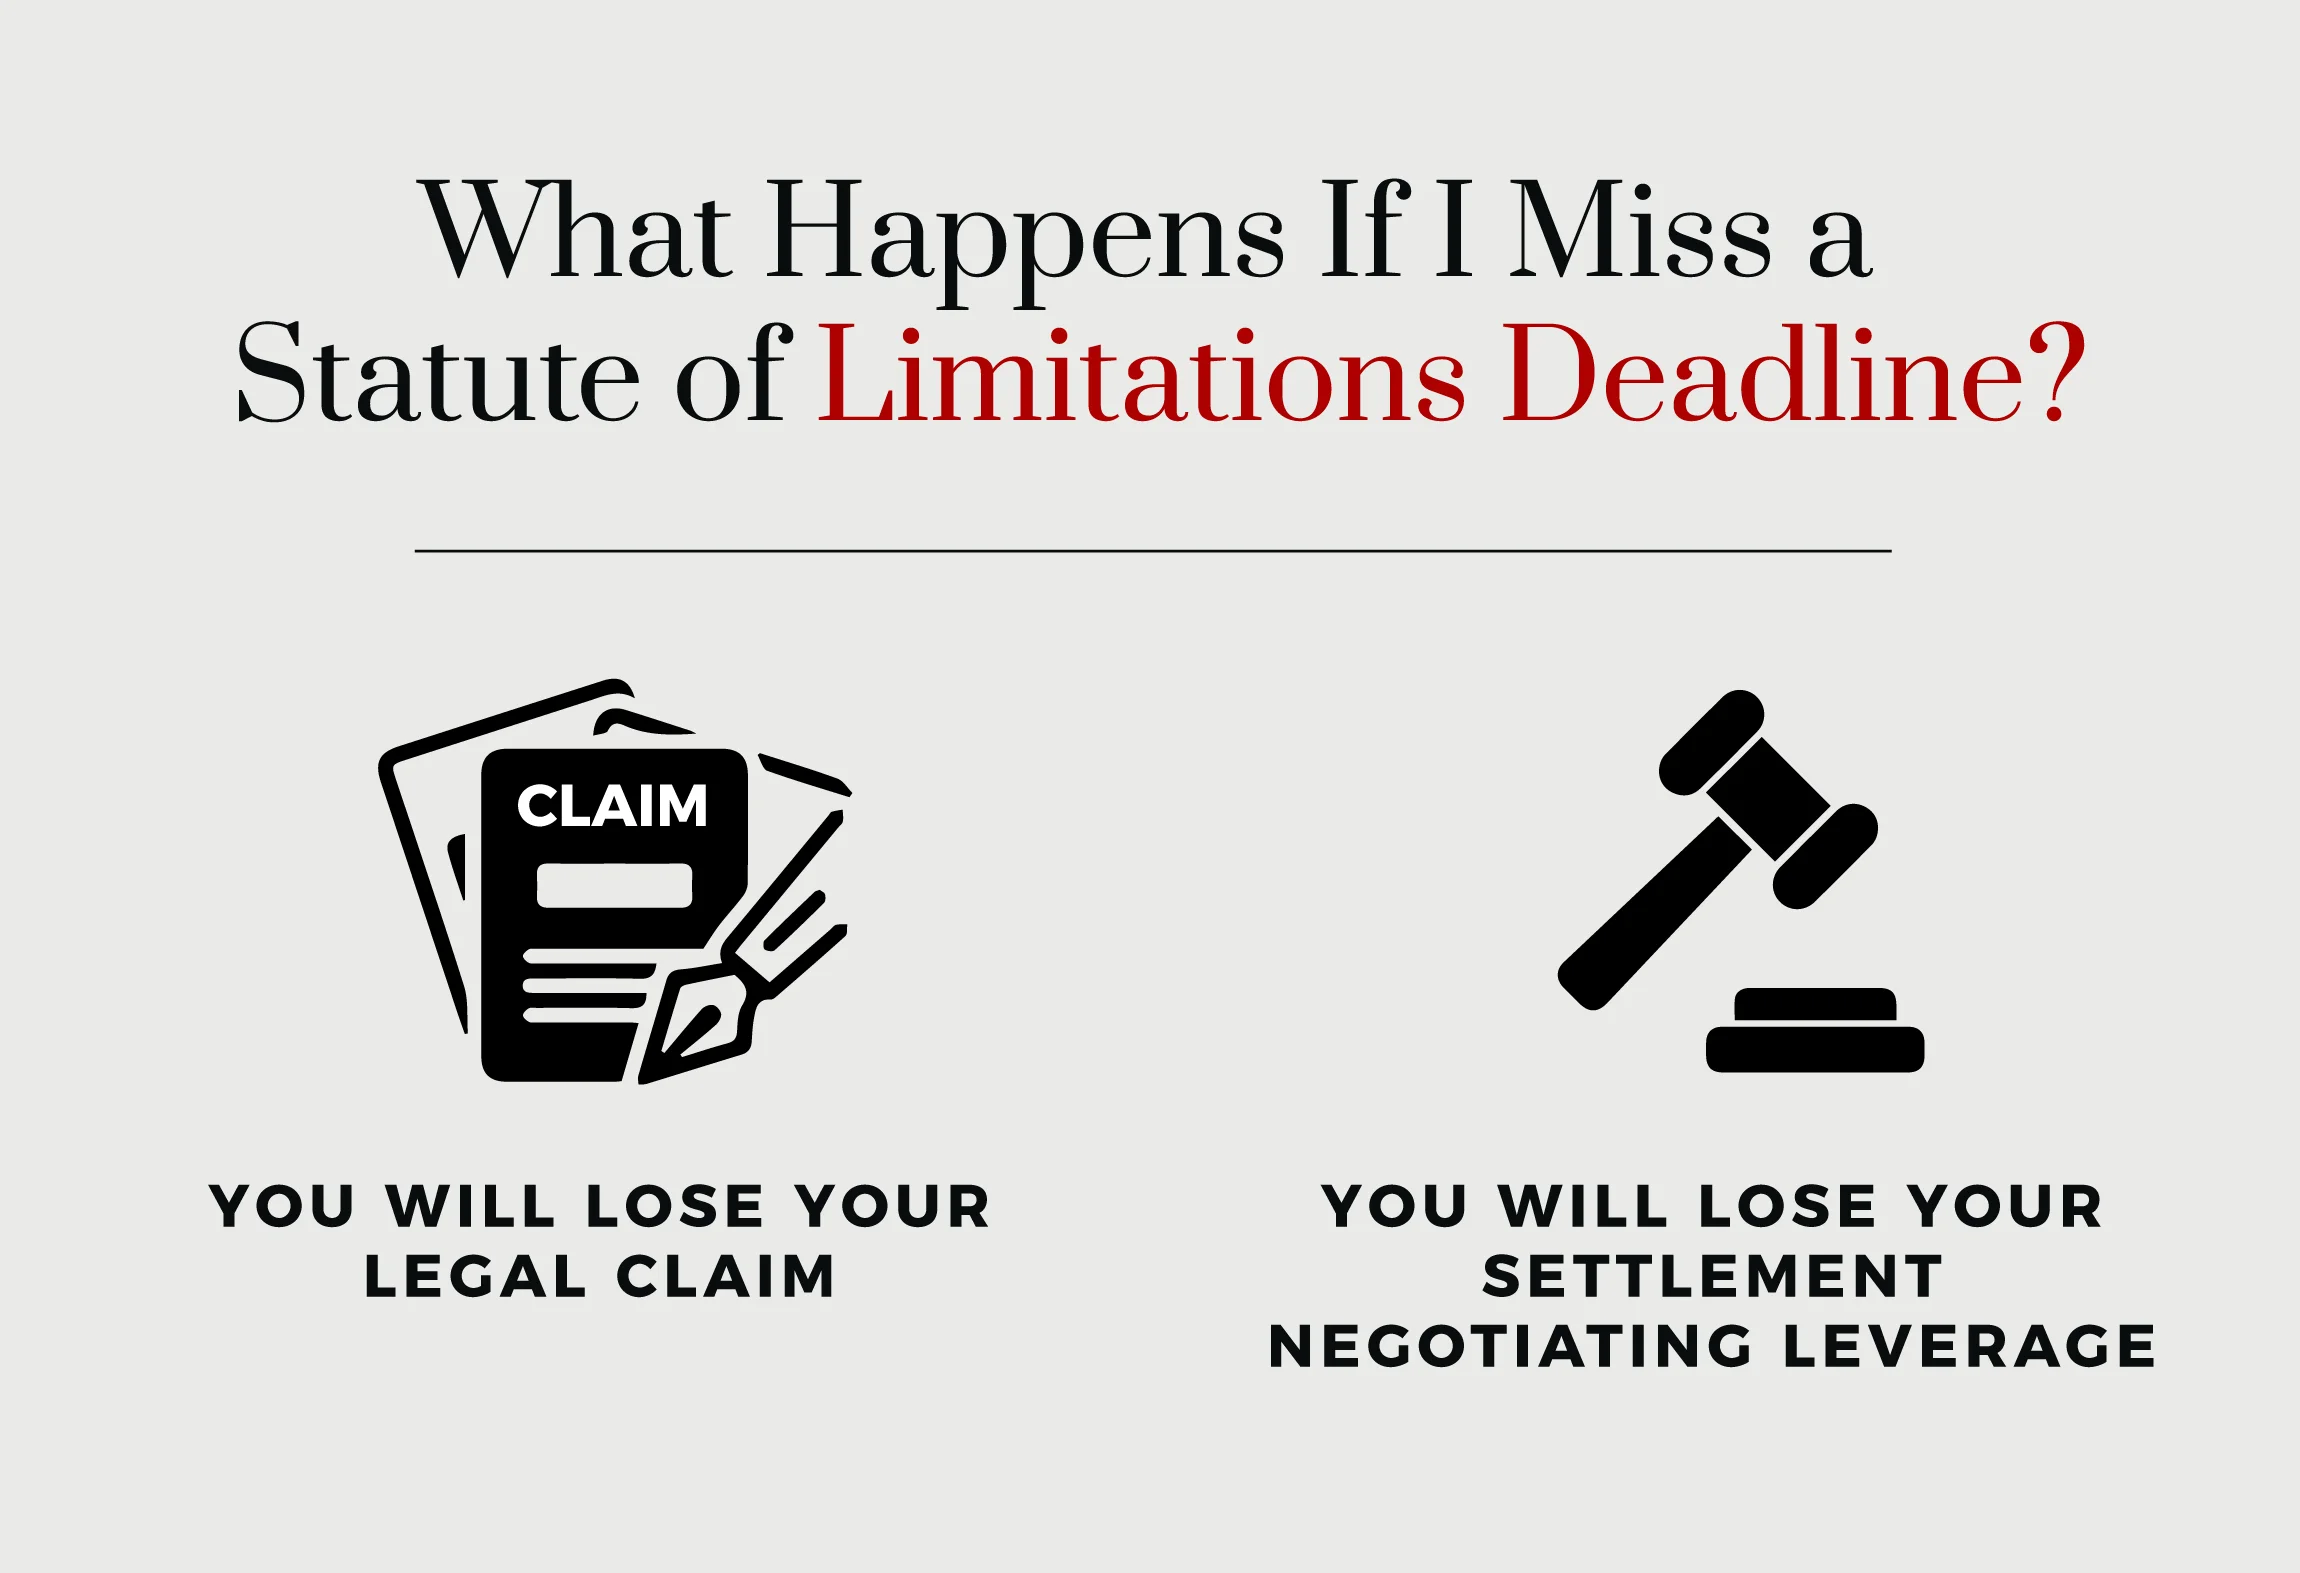 What happens if I miss a statute of limitations deadline?